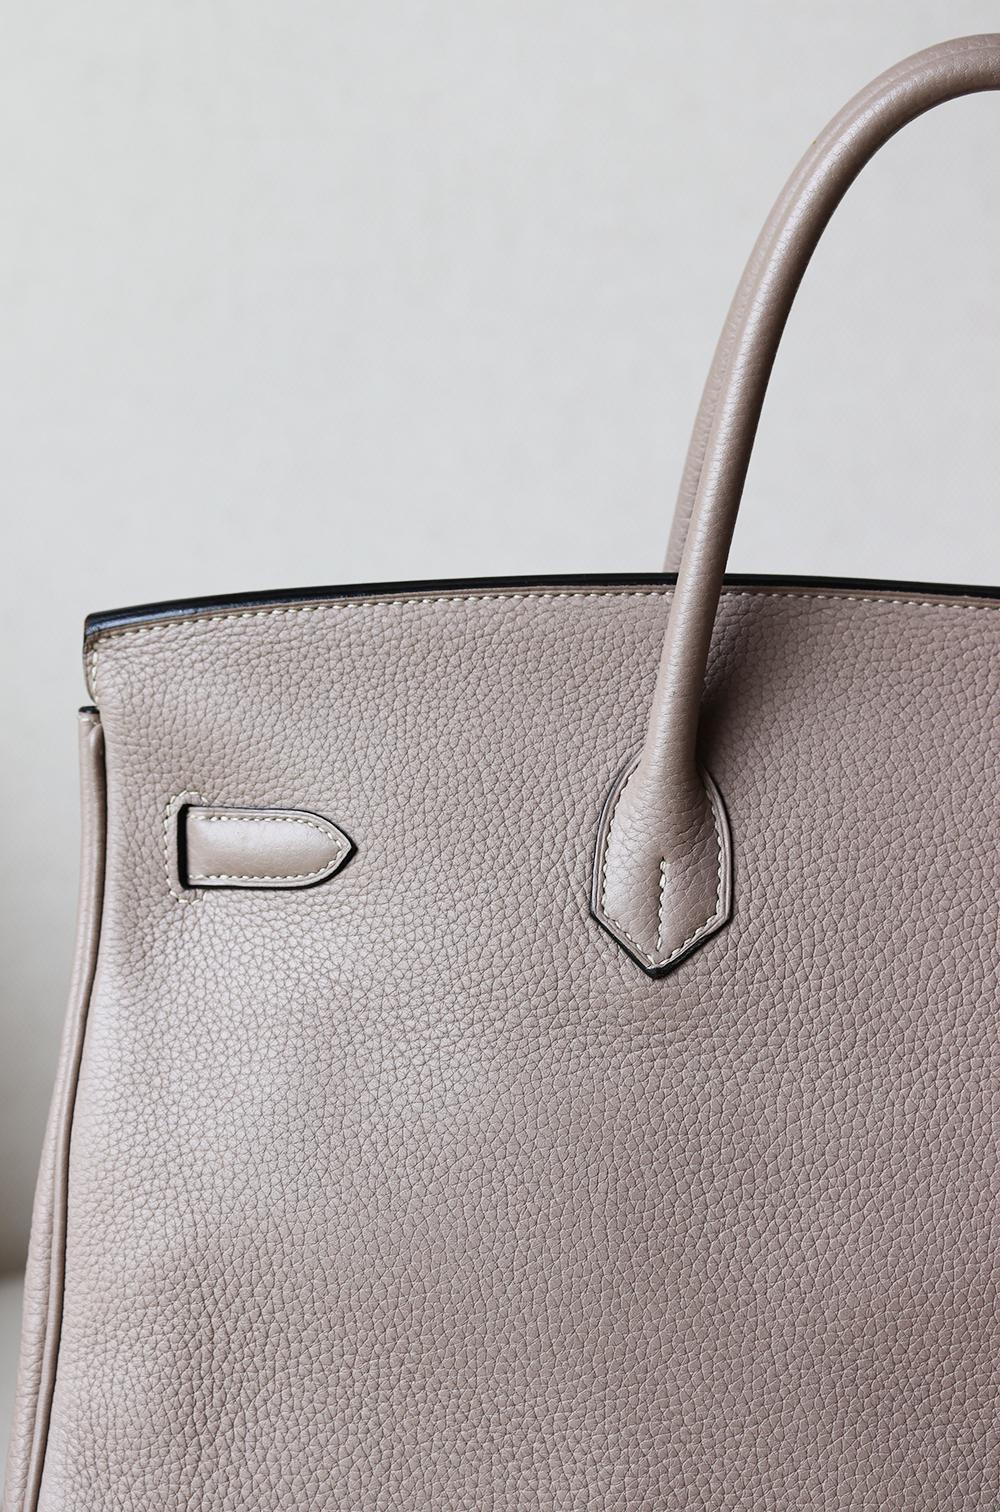 Hermès 40cm Clemence Palladium H/W Birkin Bag In Excellent Condition For Sale In London, GB